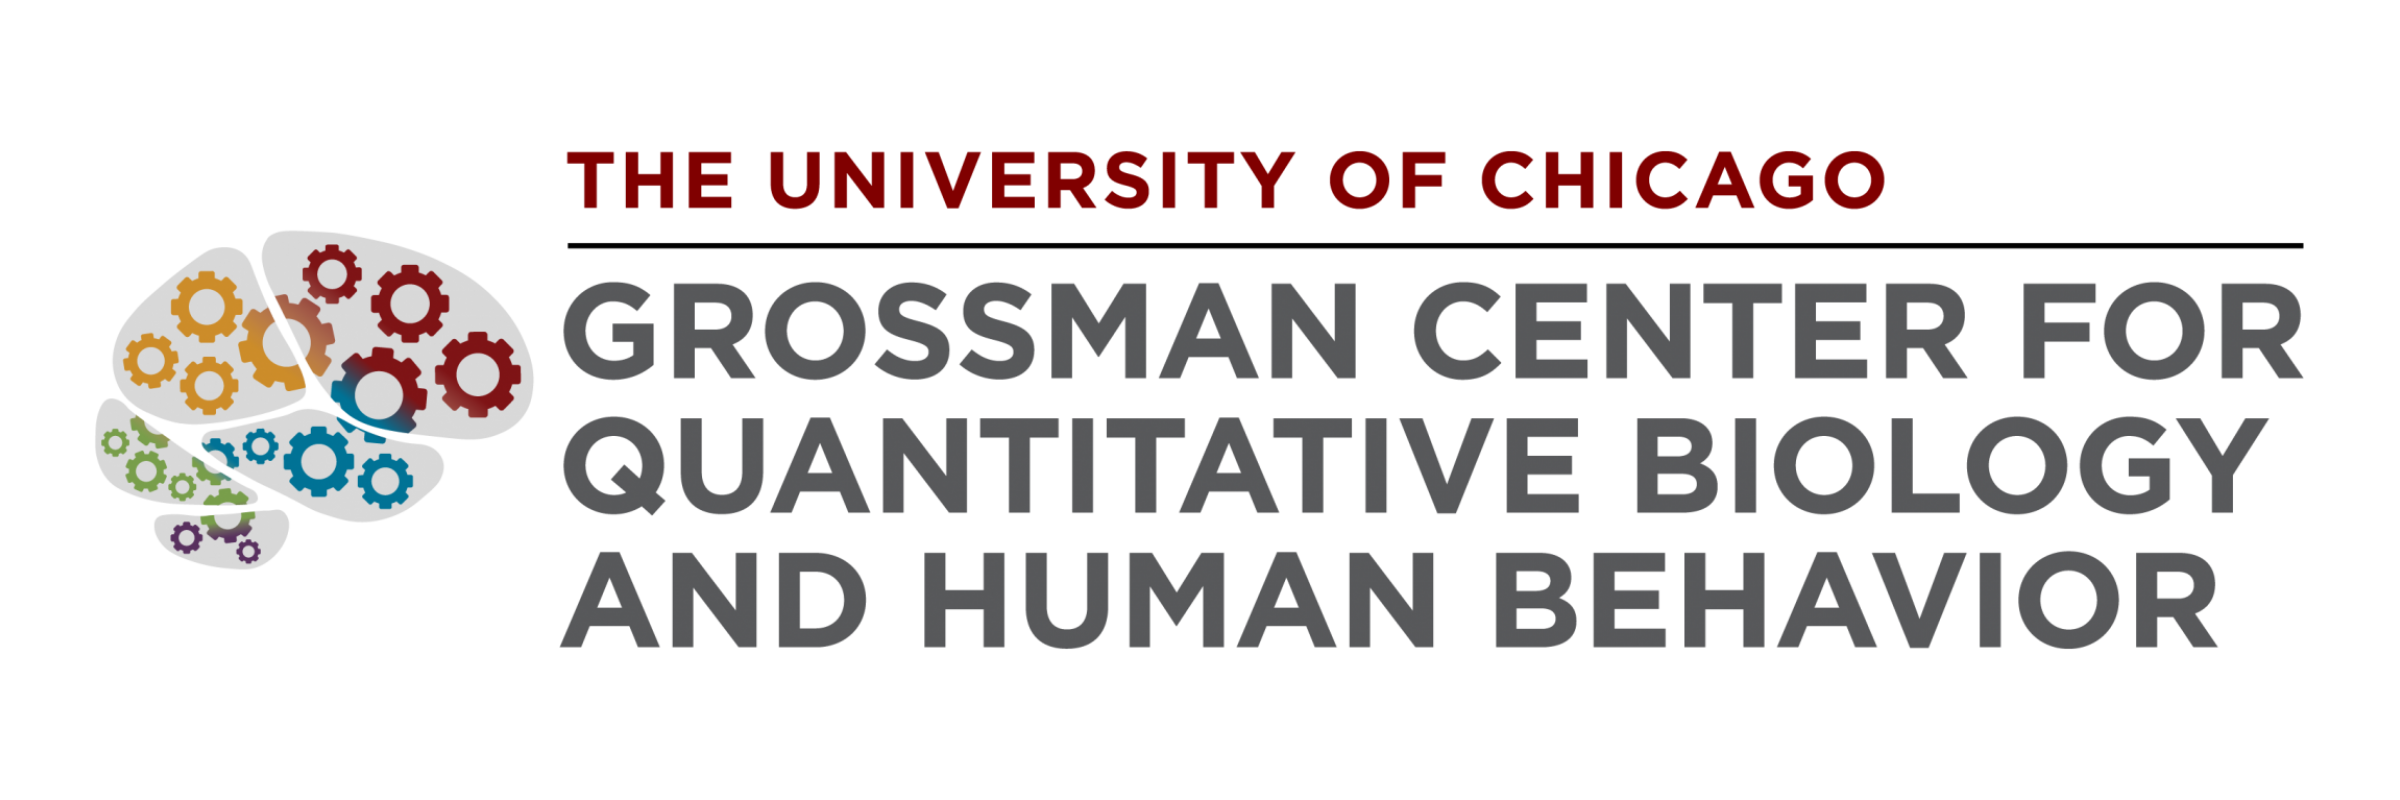 Grossman Center logo